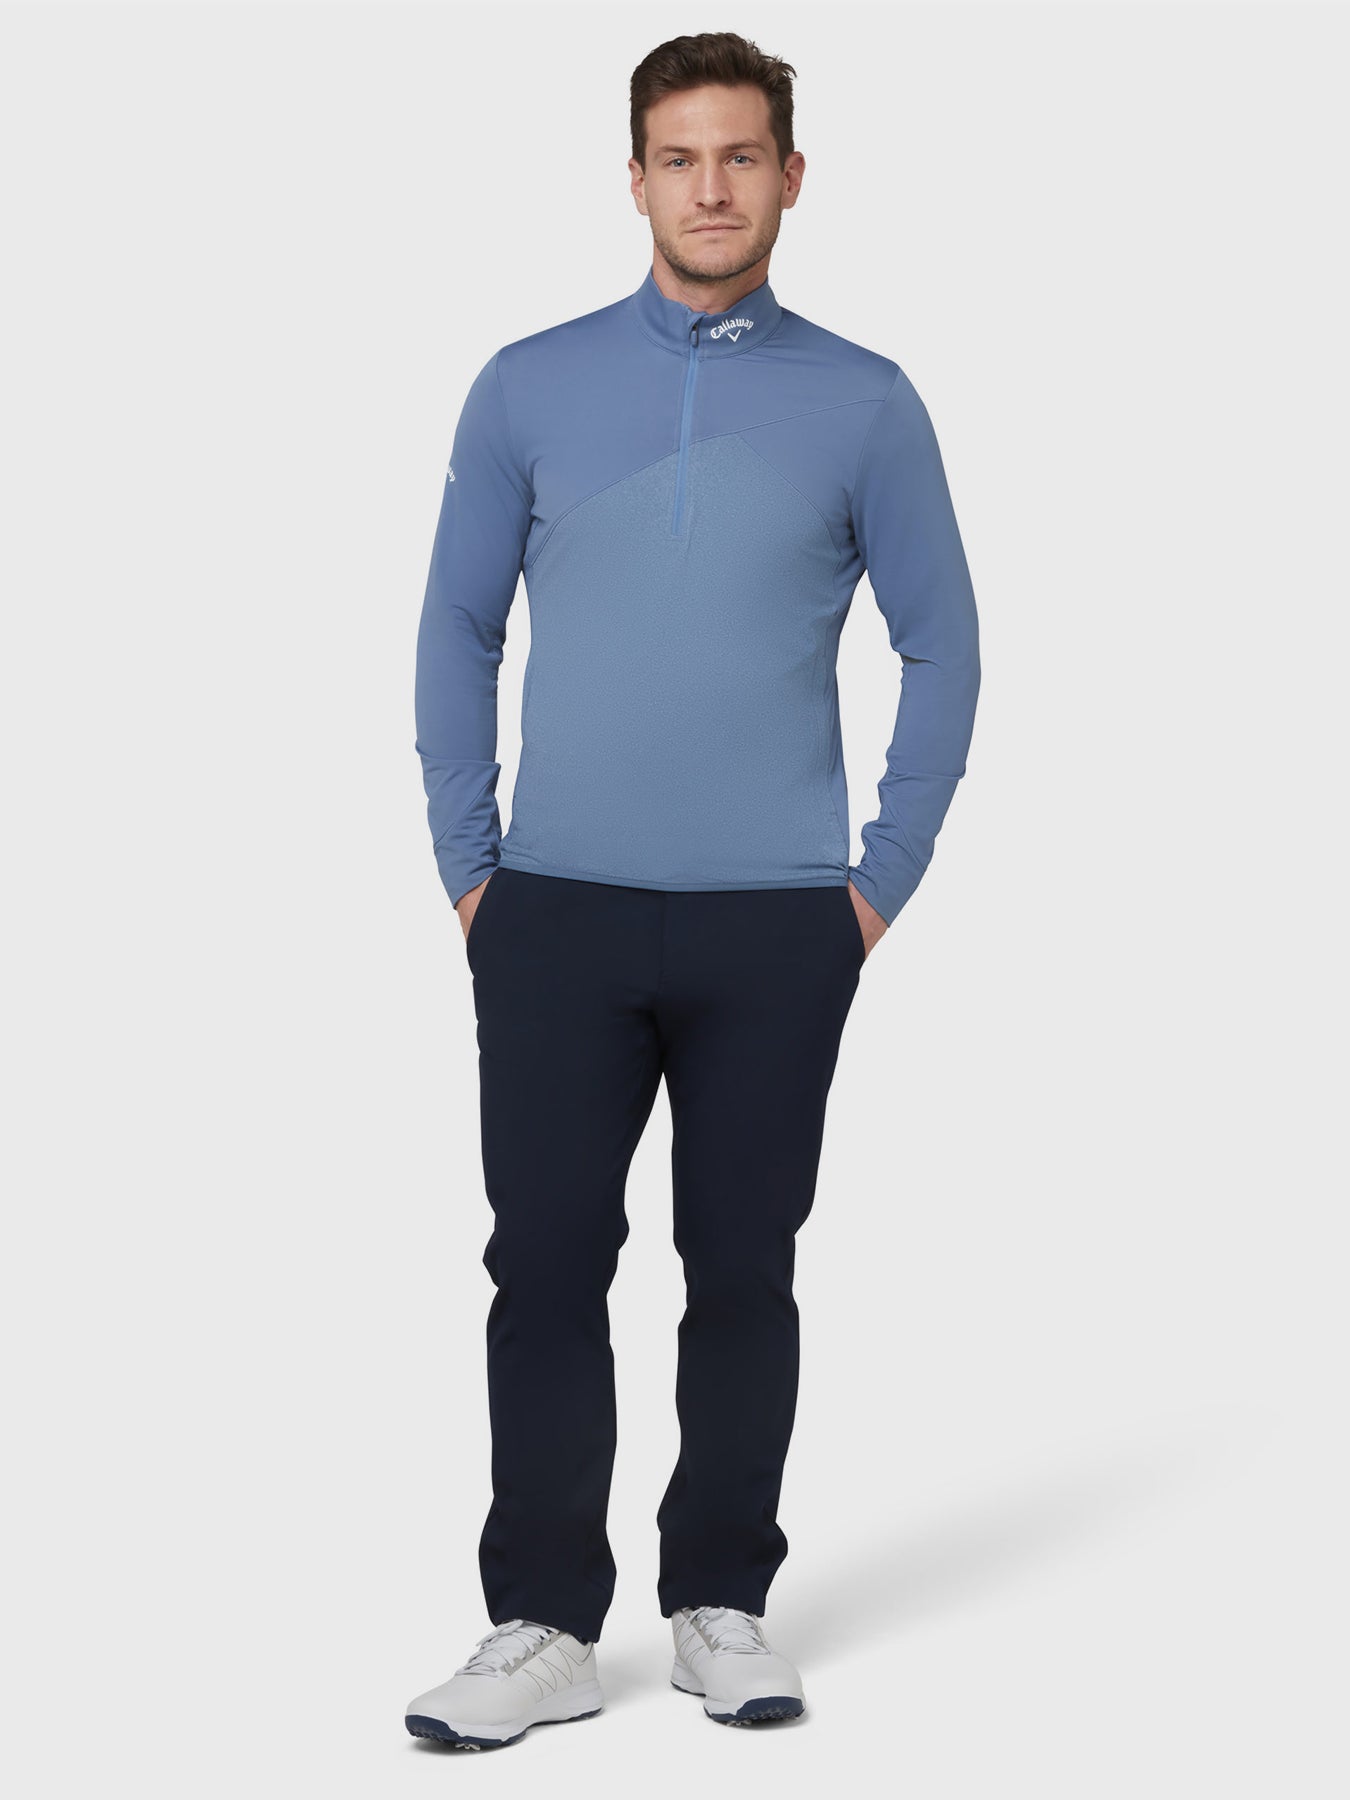 View Aquapel Ultra Light Quarter Zip Sweatshirt In Blue Horizon Blue Horizon L information